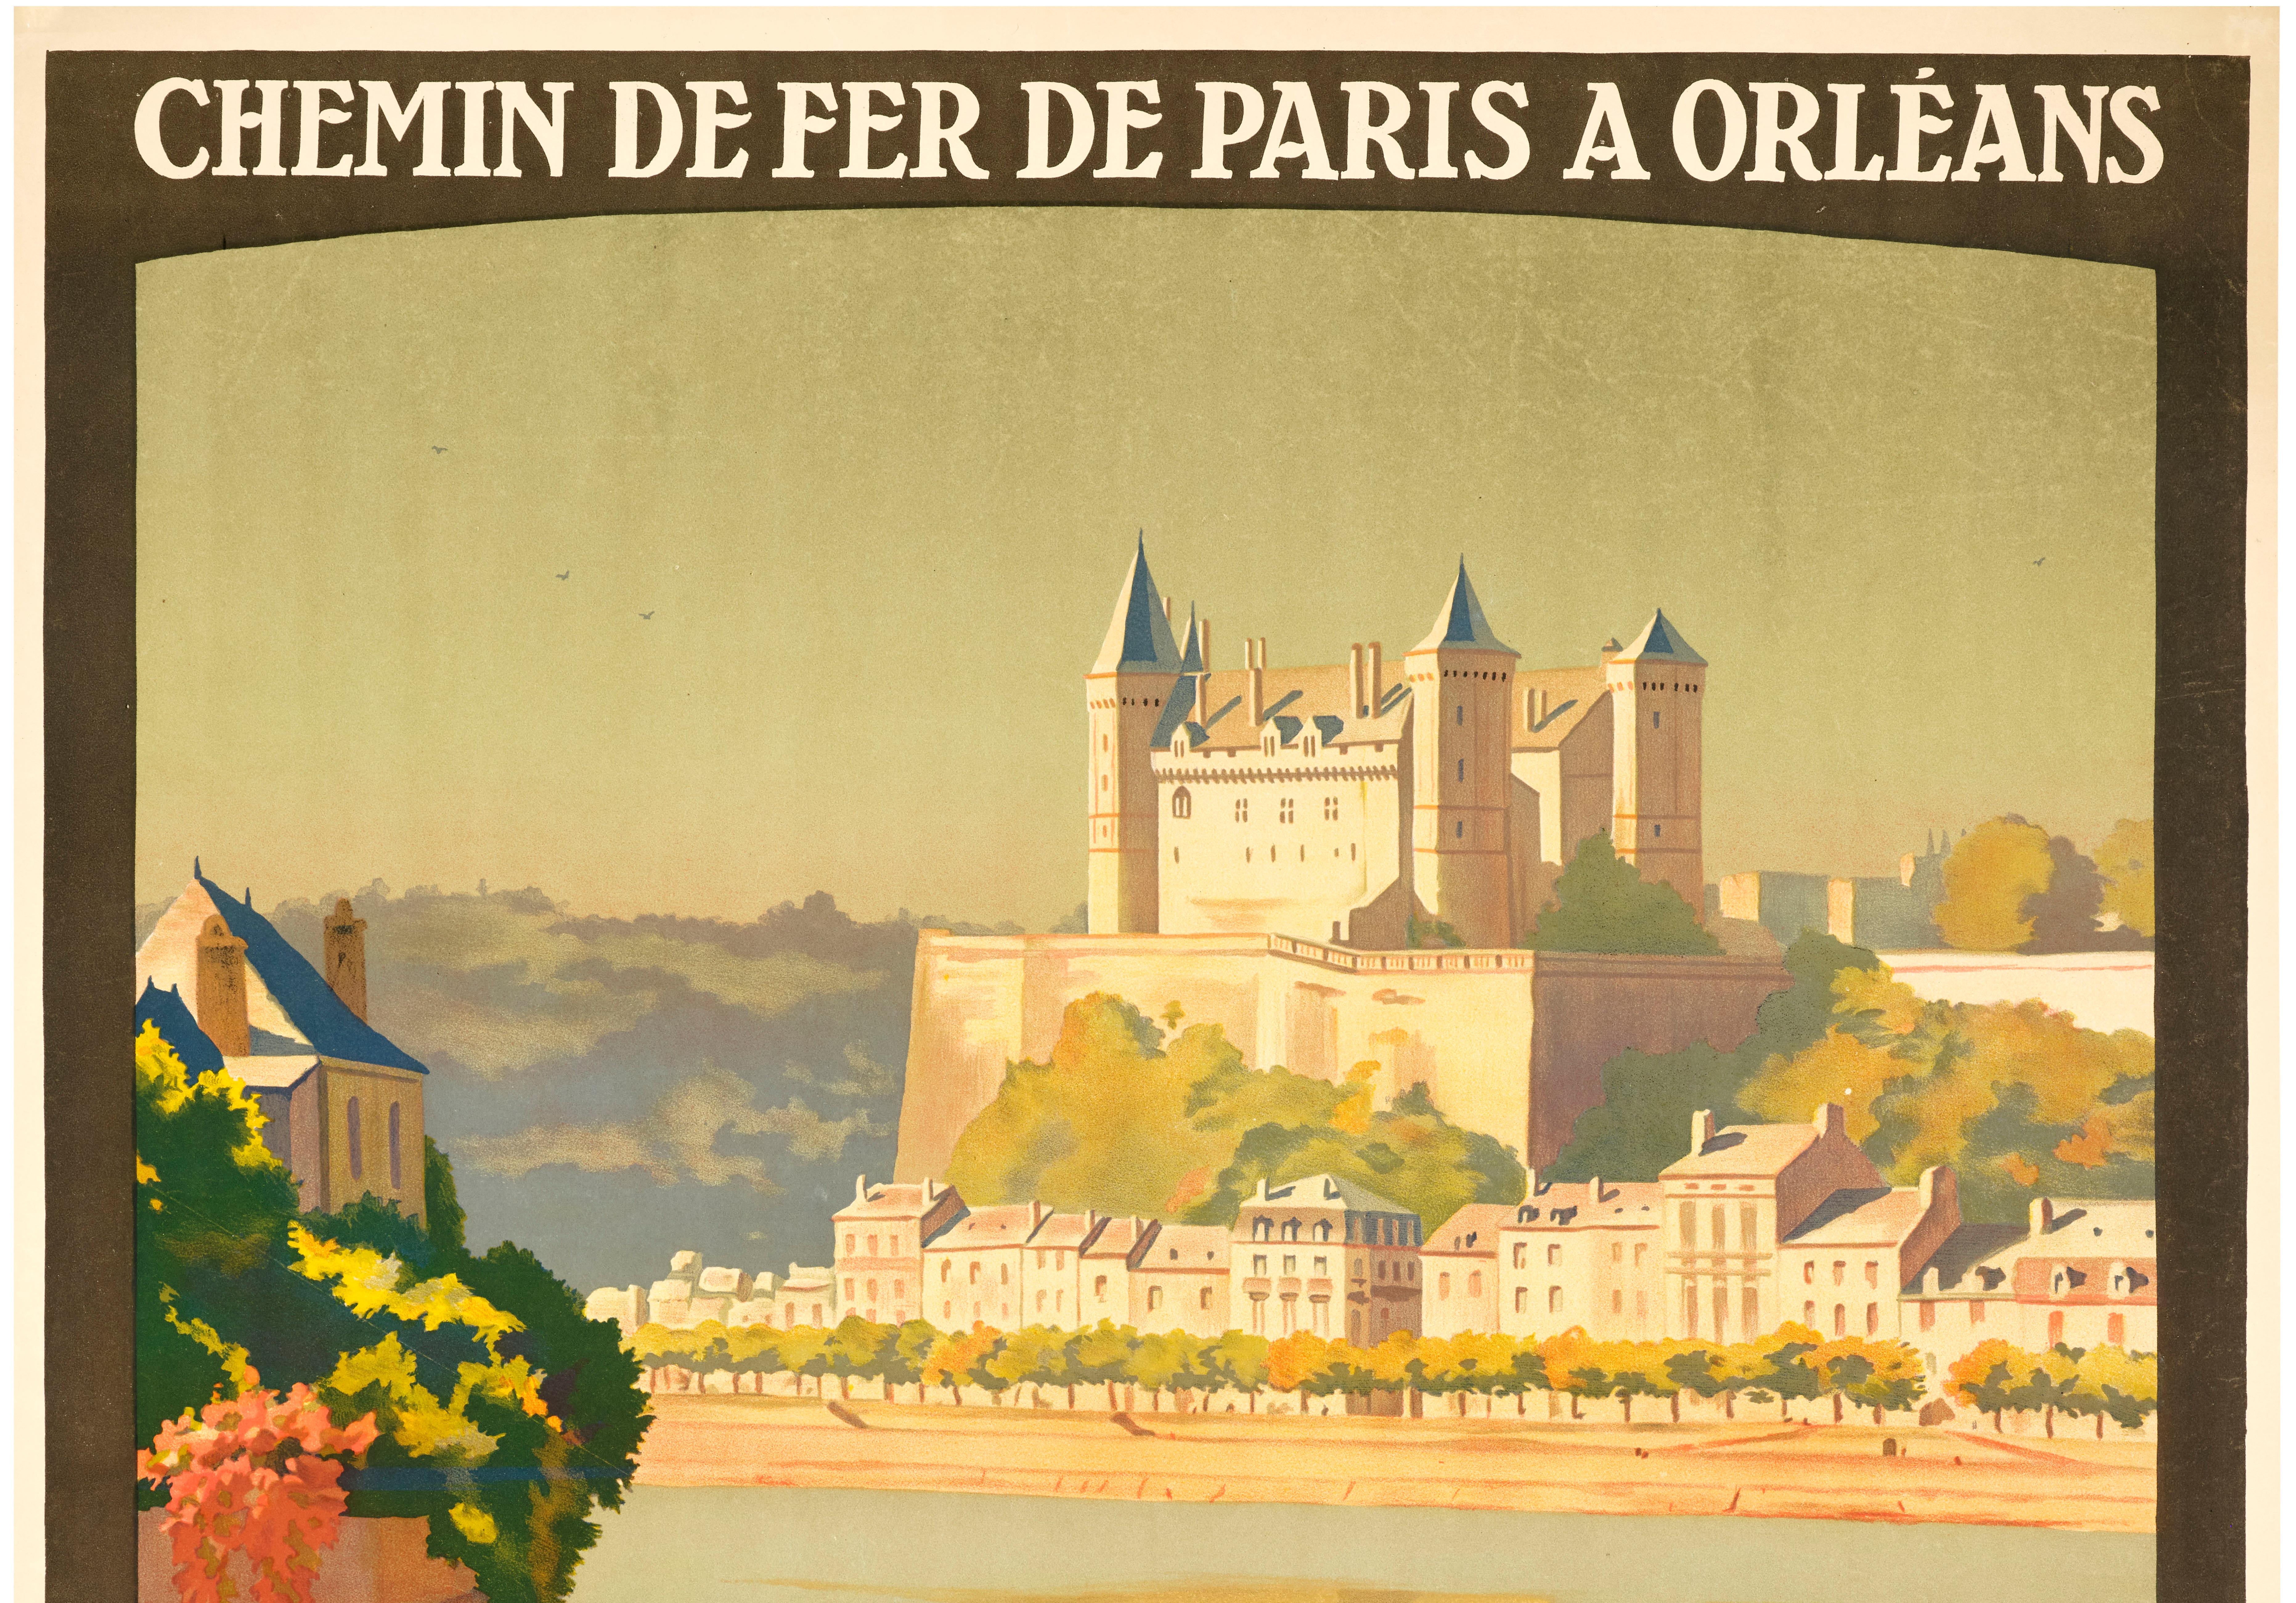 Poster of the Chemins de fer from Paris to Orléans created by Constant Duval in 1924 to promote tourism to the Châteaux de la Loire.

Artist: Constant Léon Duval
Title: Château de Saumur
Date: 1924
Signature: Bottom right
Size: 29.3 x 41 in / 74.5 x